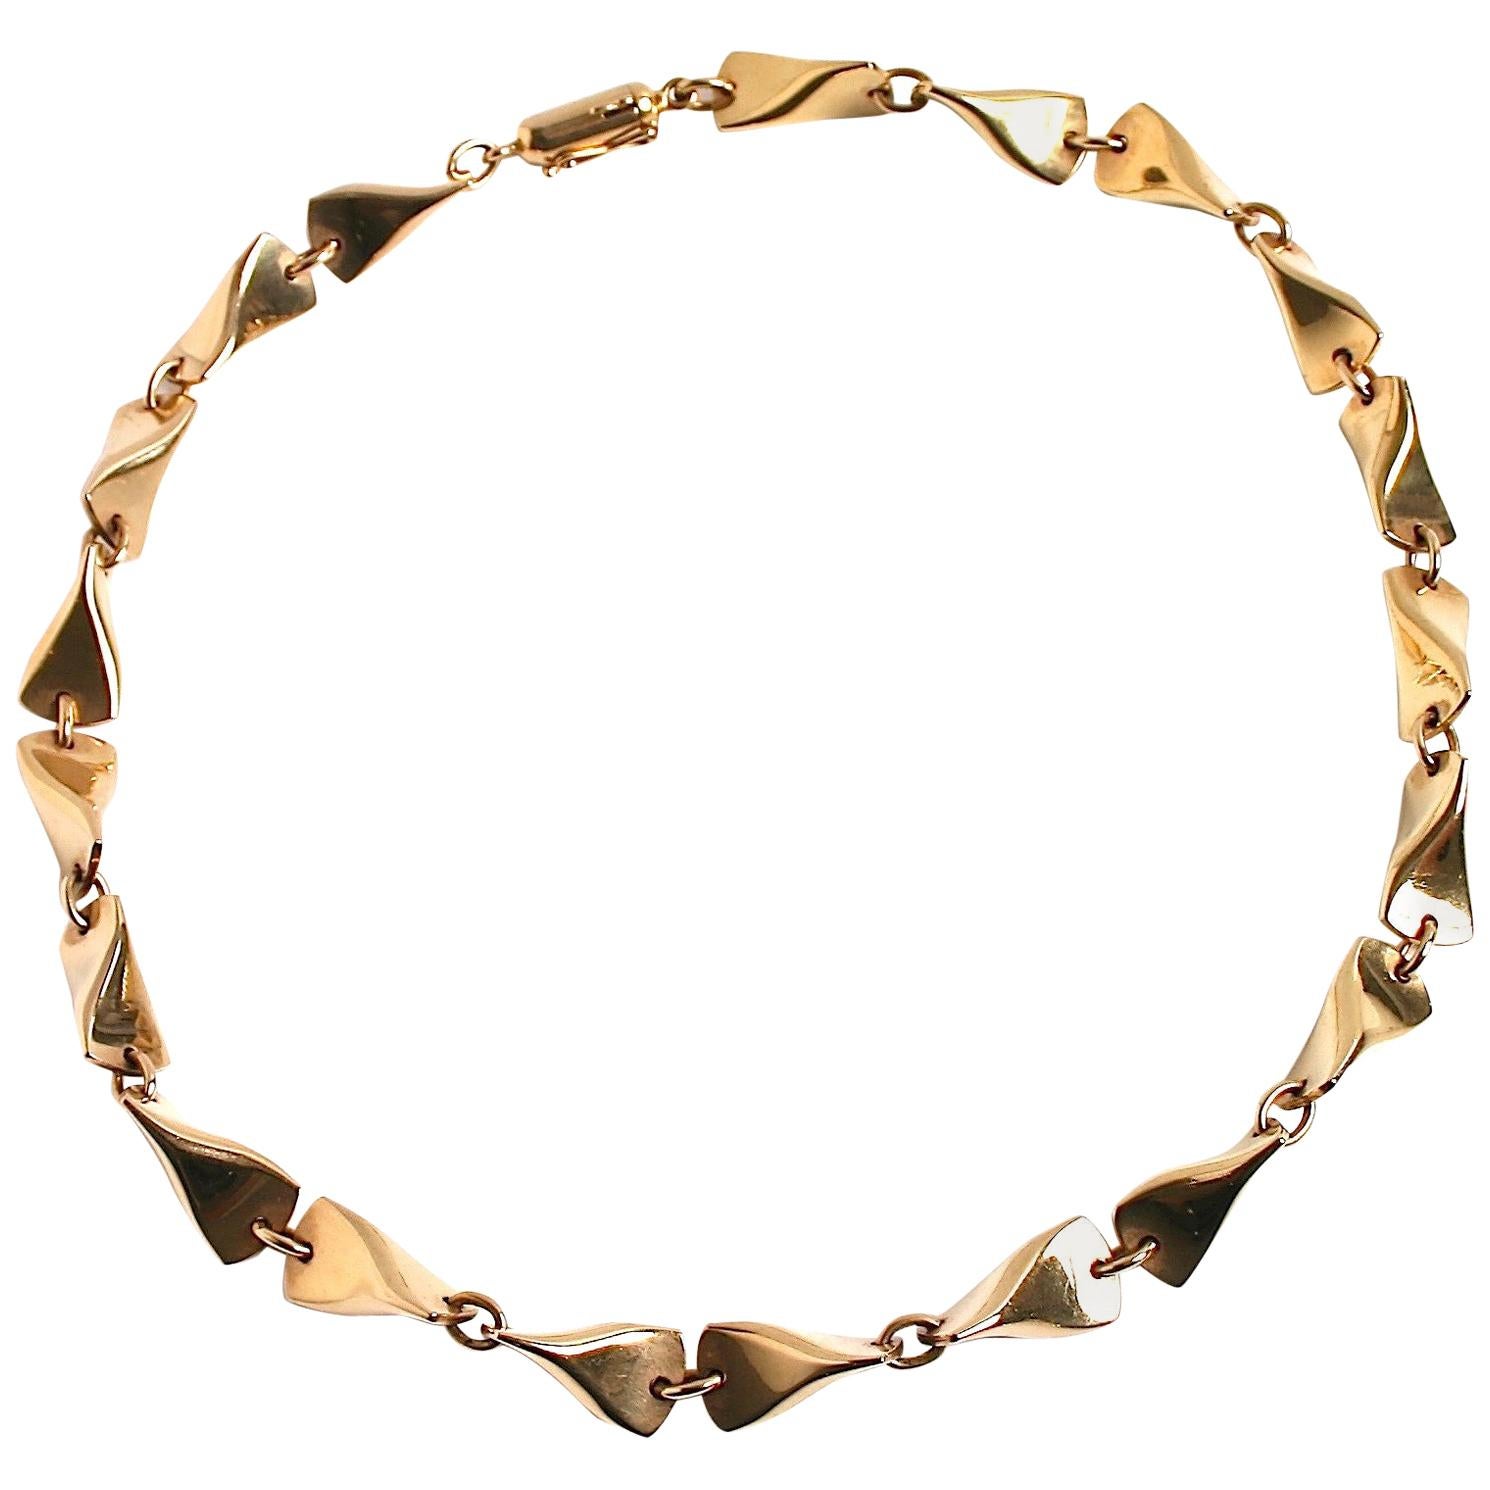 Georg Jensen 18 Karat Gold Butterfly Necklace Designed by Edvard Kindt Larsen